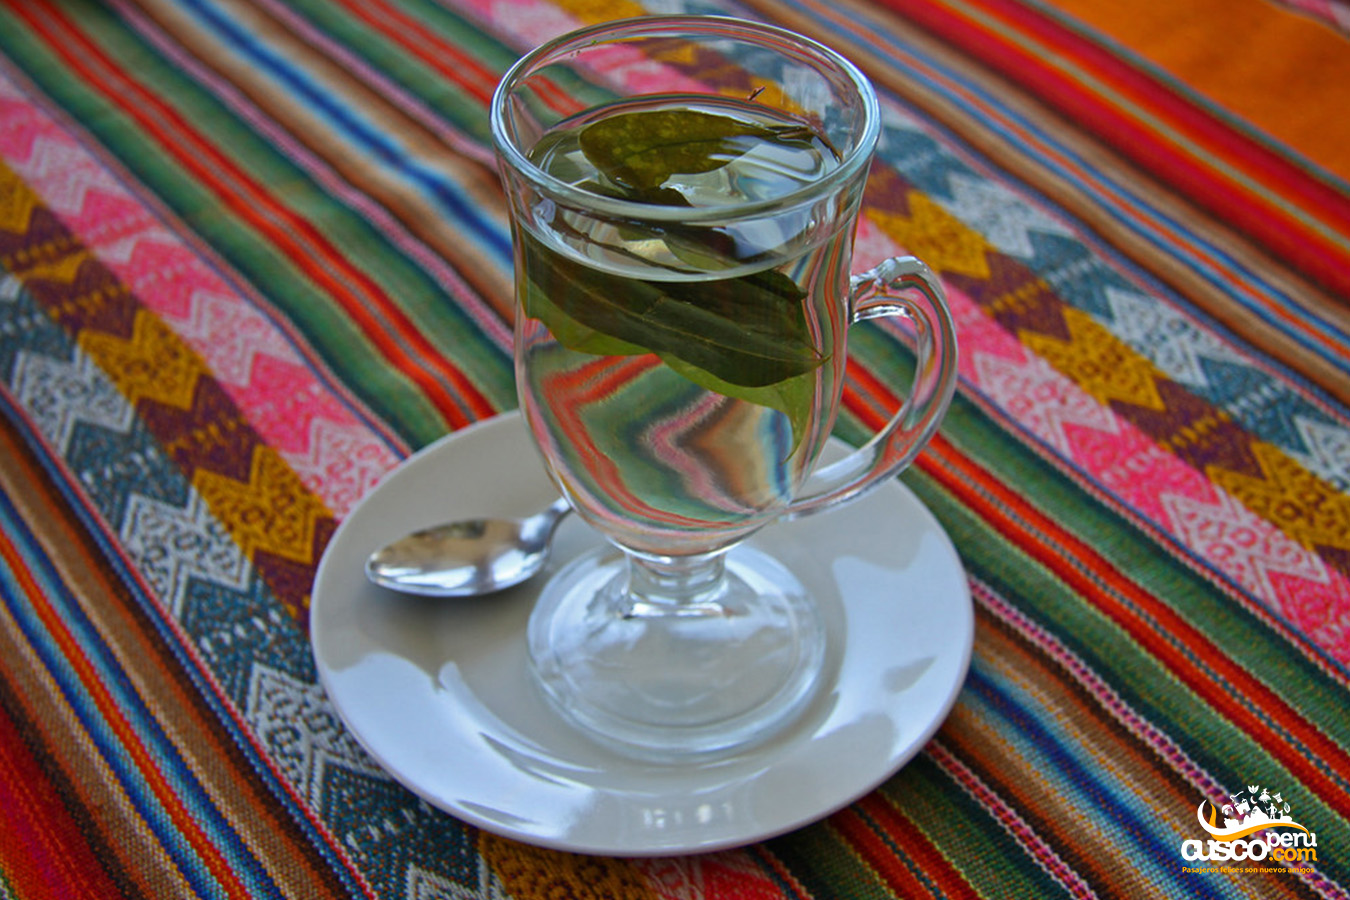 Coca tea. Source: CuscoPeru.com